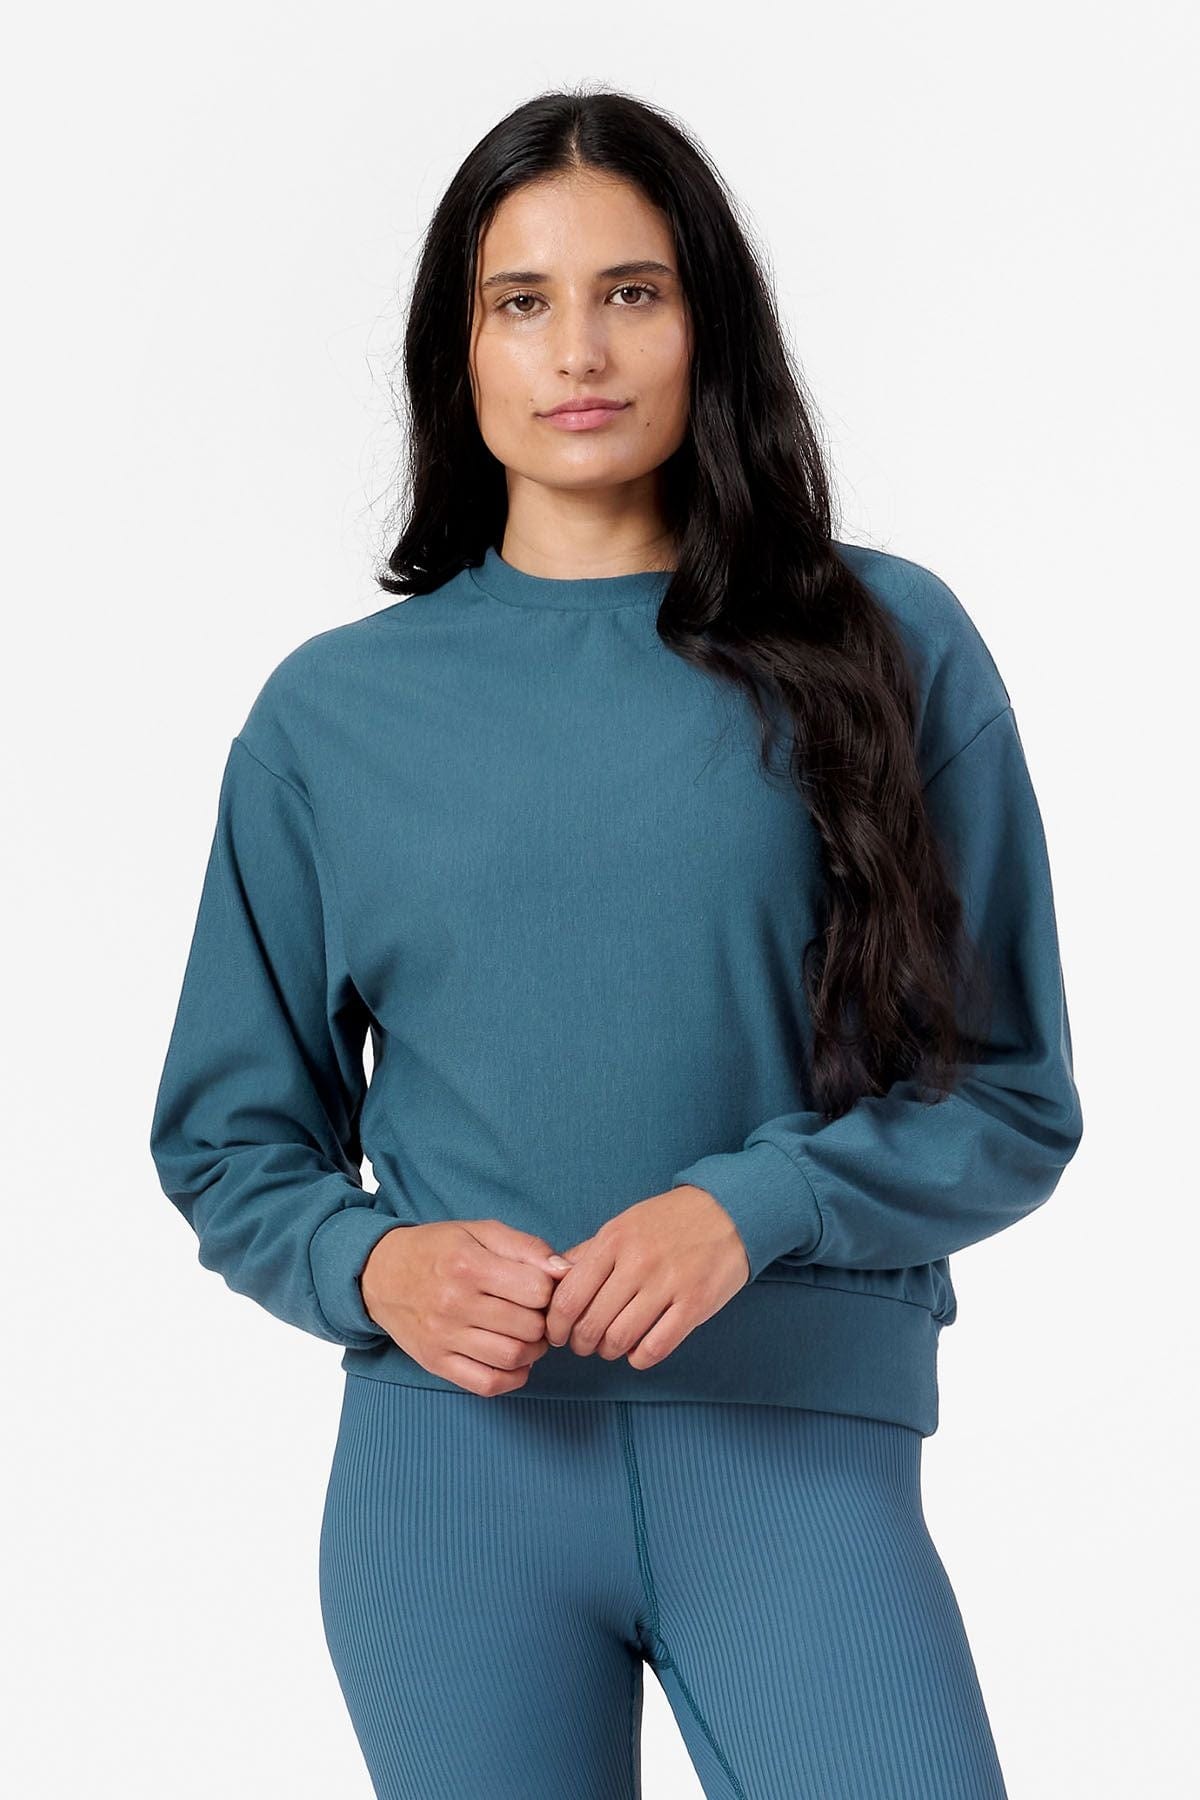 Woman wearing teal sweatshirt